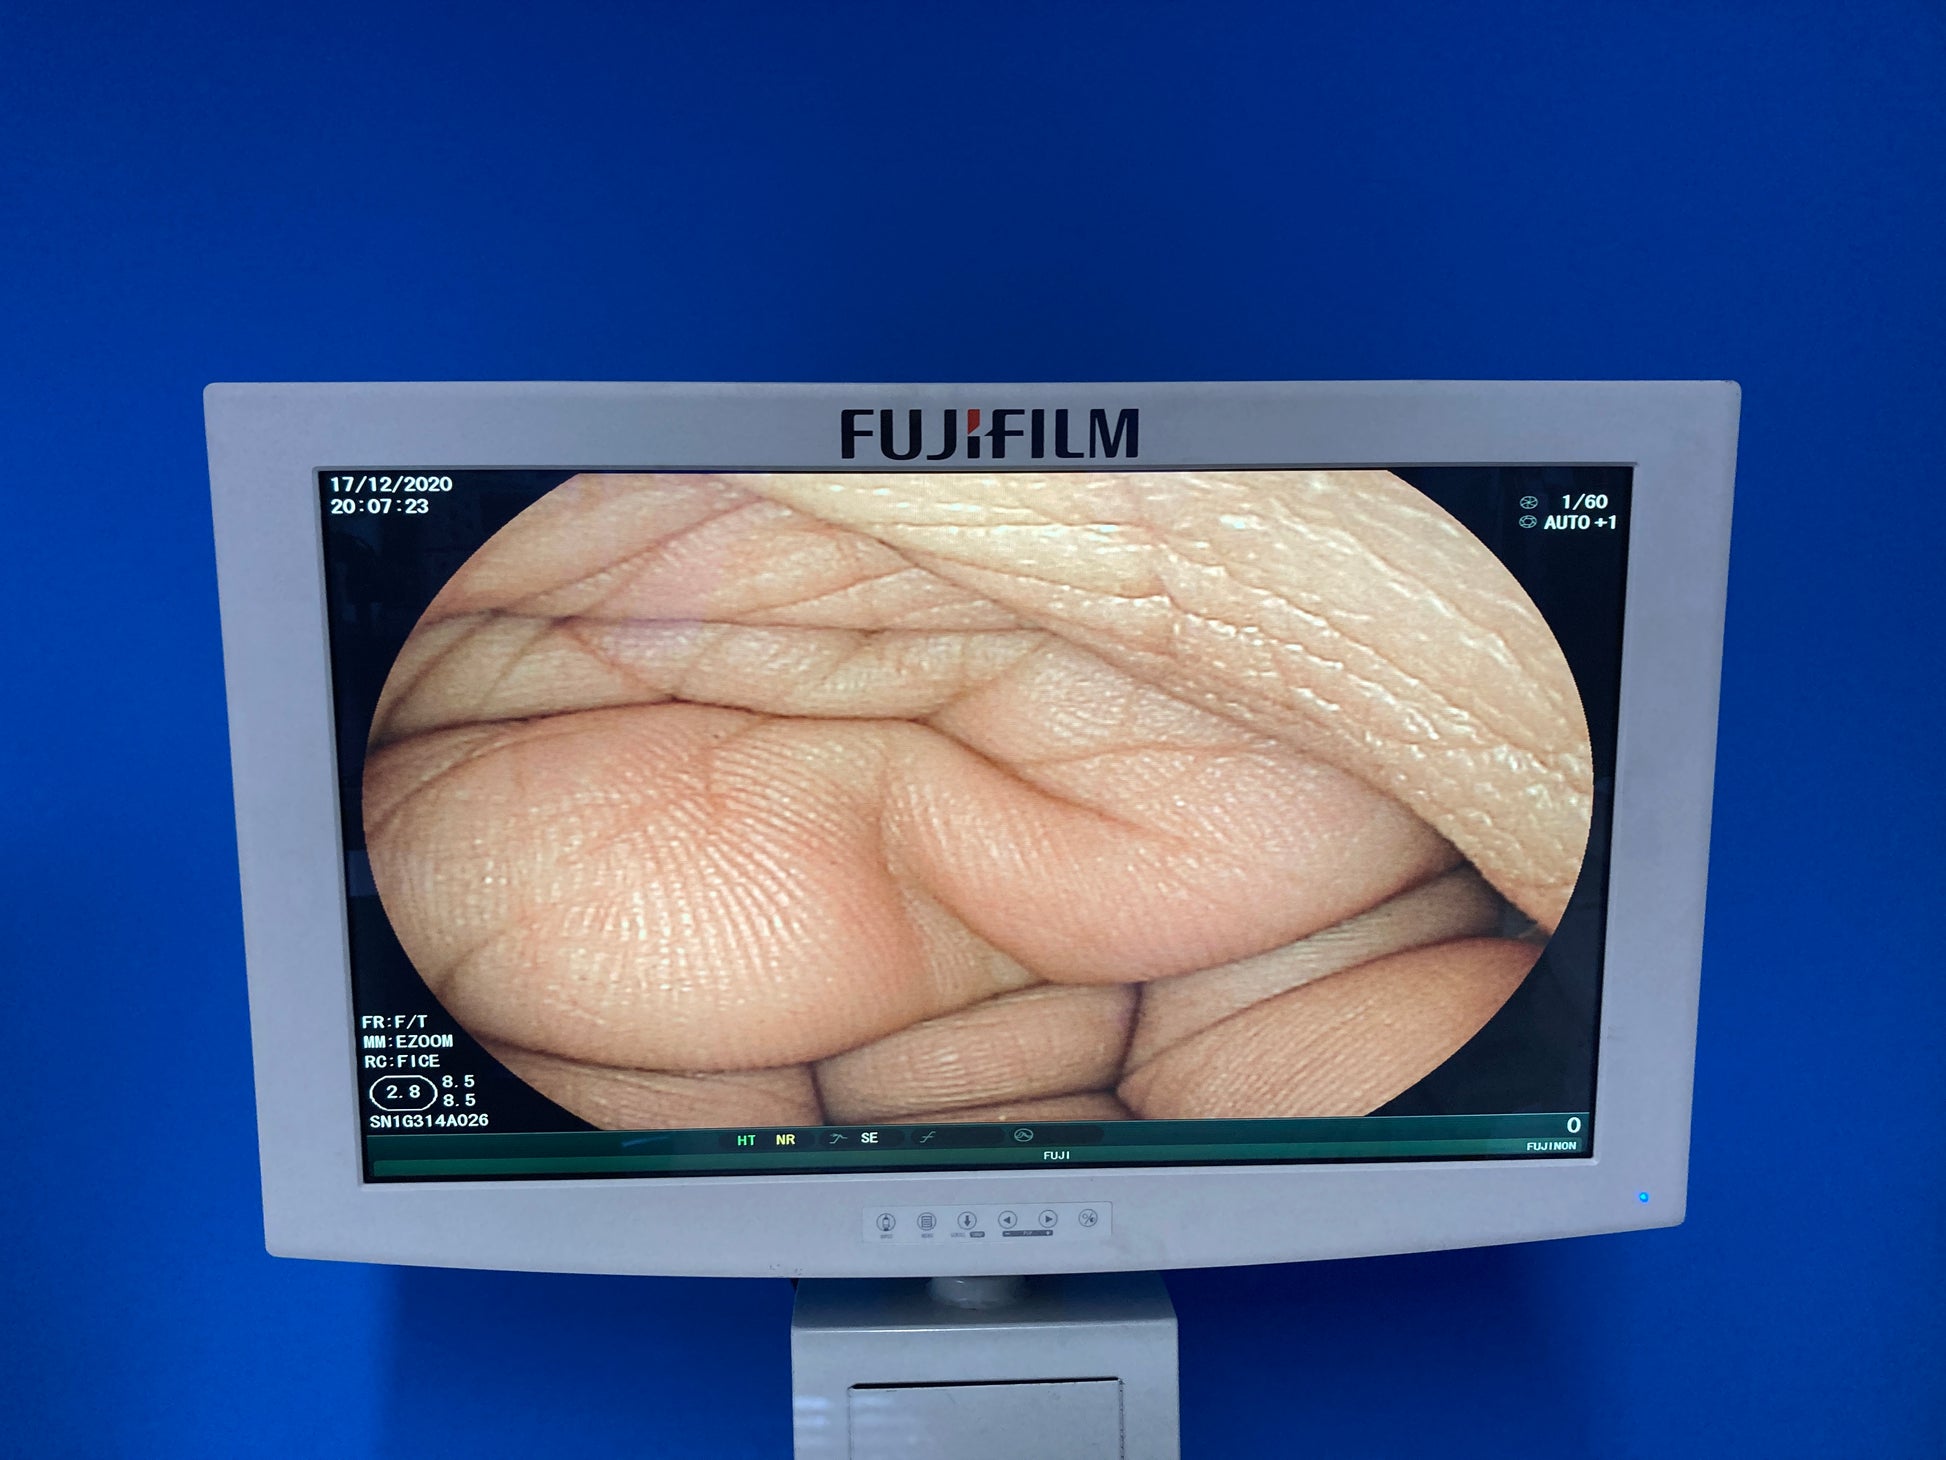 Fujifilm’s Endoscope Visualization System displays